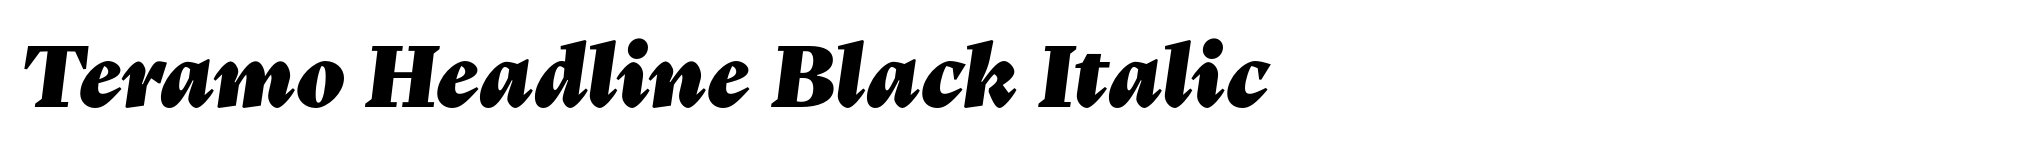 Teramo Headline Black Italic image